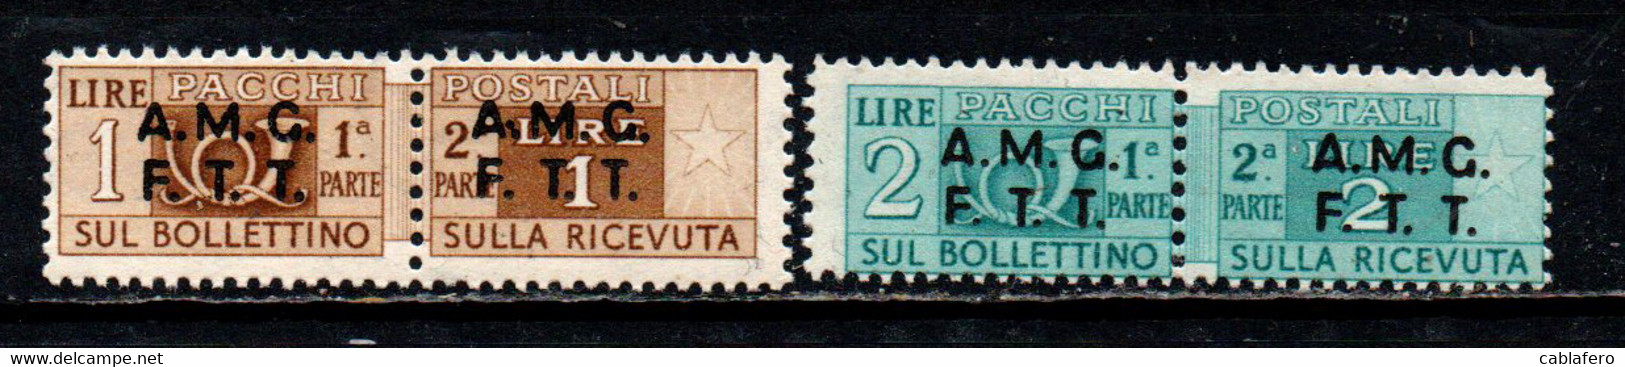 TRIESTE - AMGFTT - 1947 - PACCHI POSTALI - SOVRASTAMPA SU DUE LINEE - 1 E 2 LIRE - MNH - Paquetes Postales/consigna